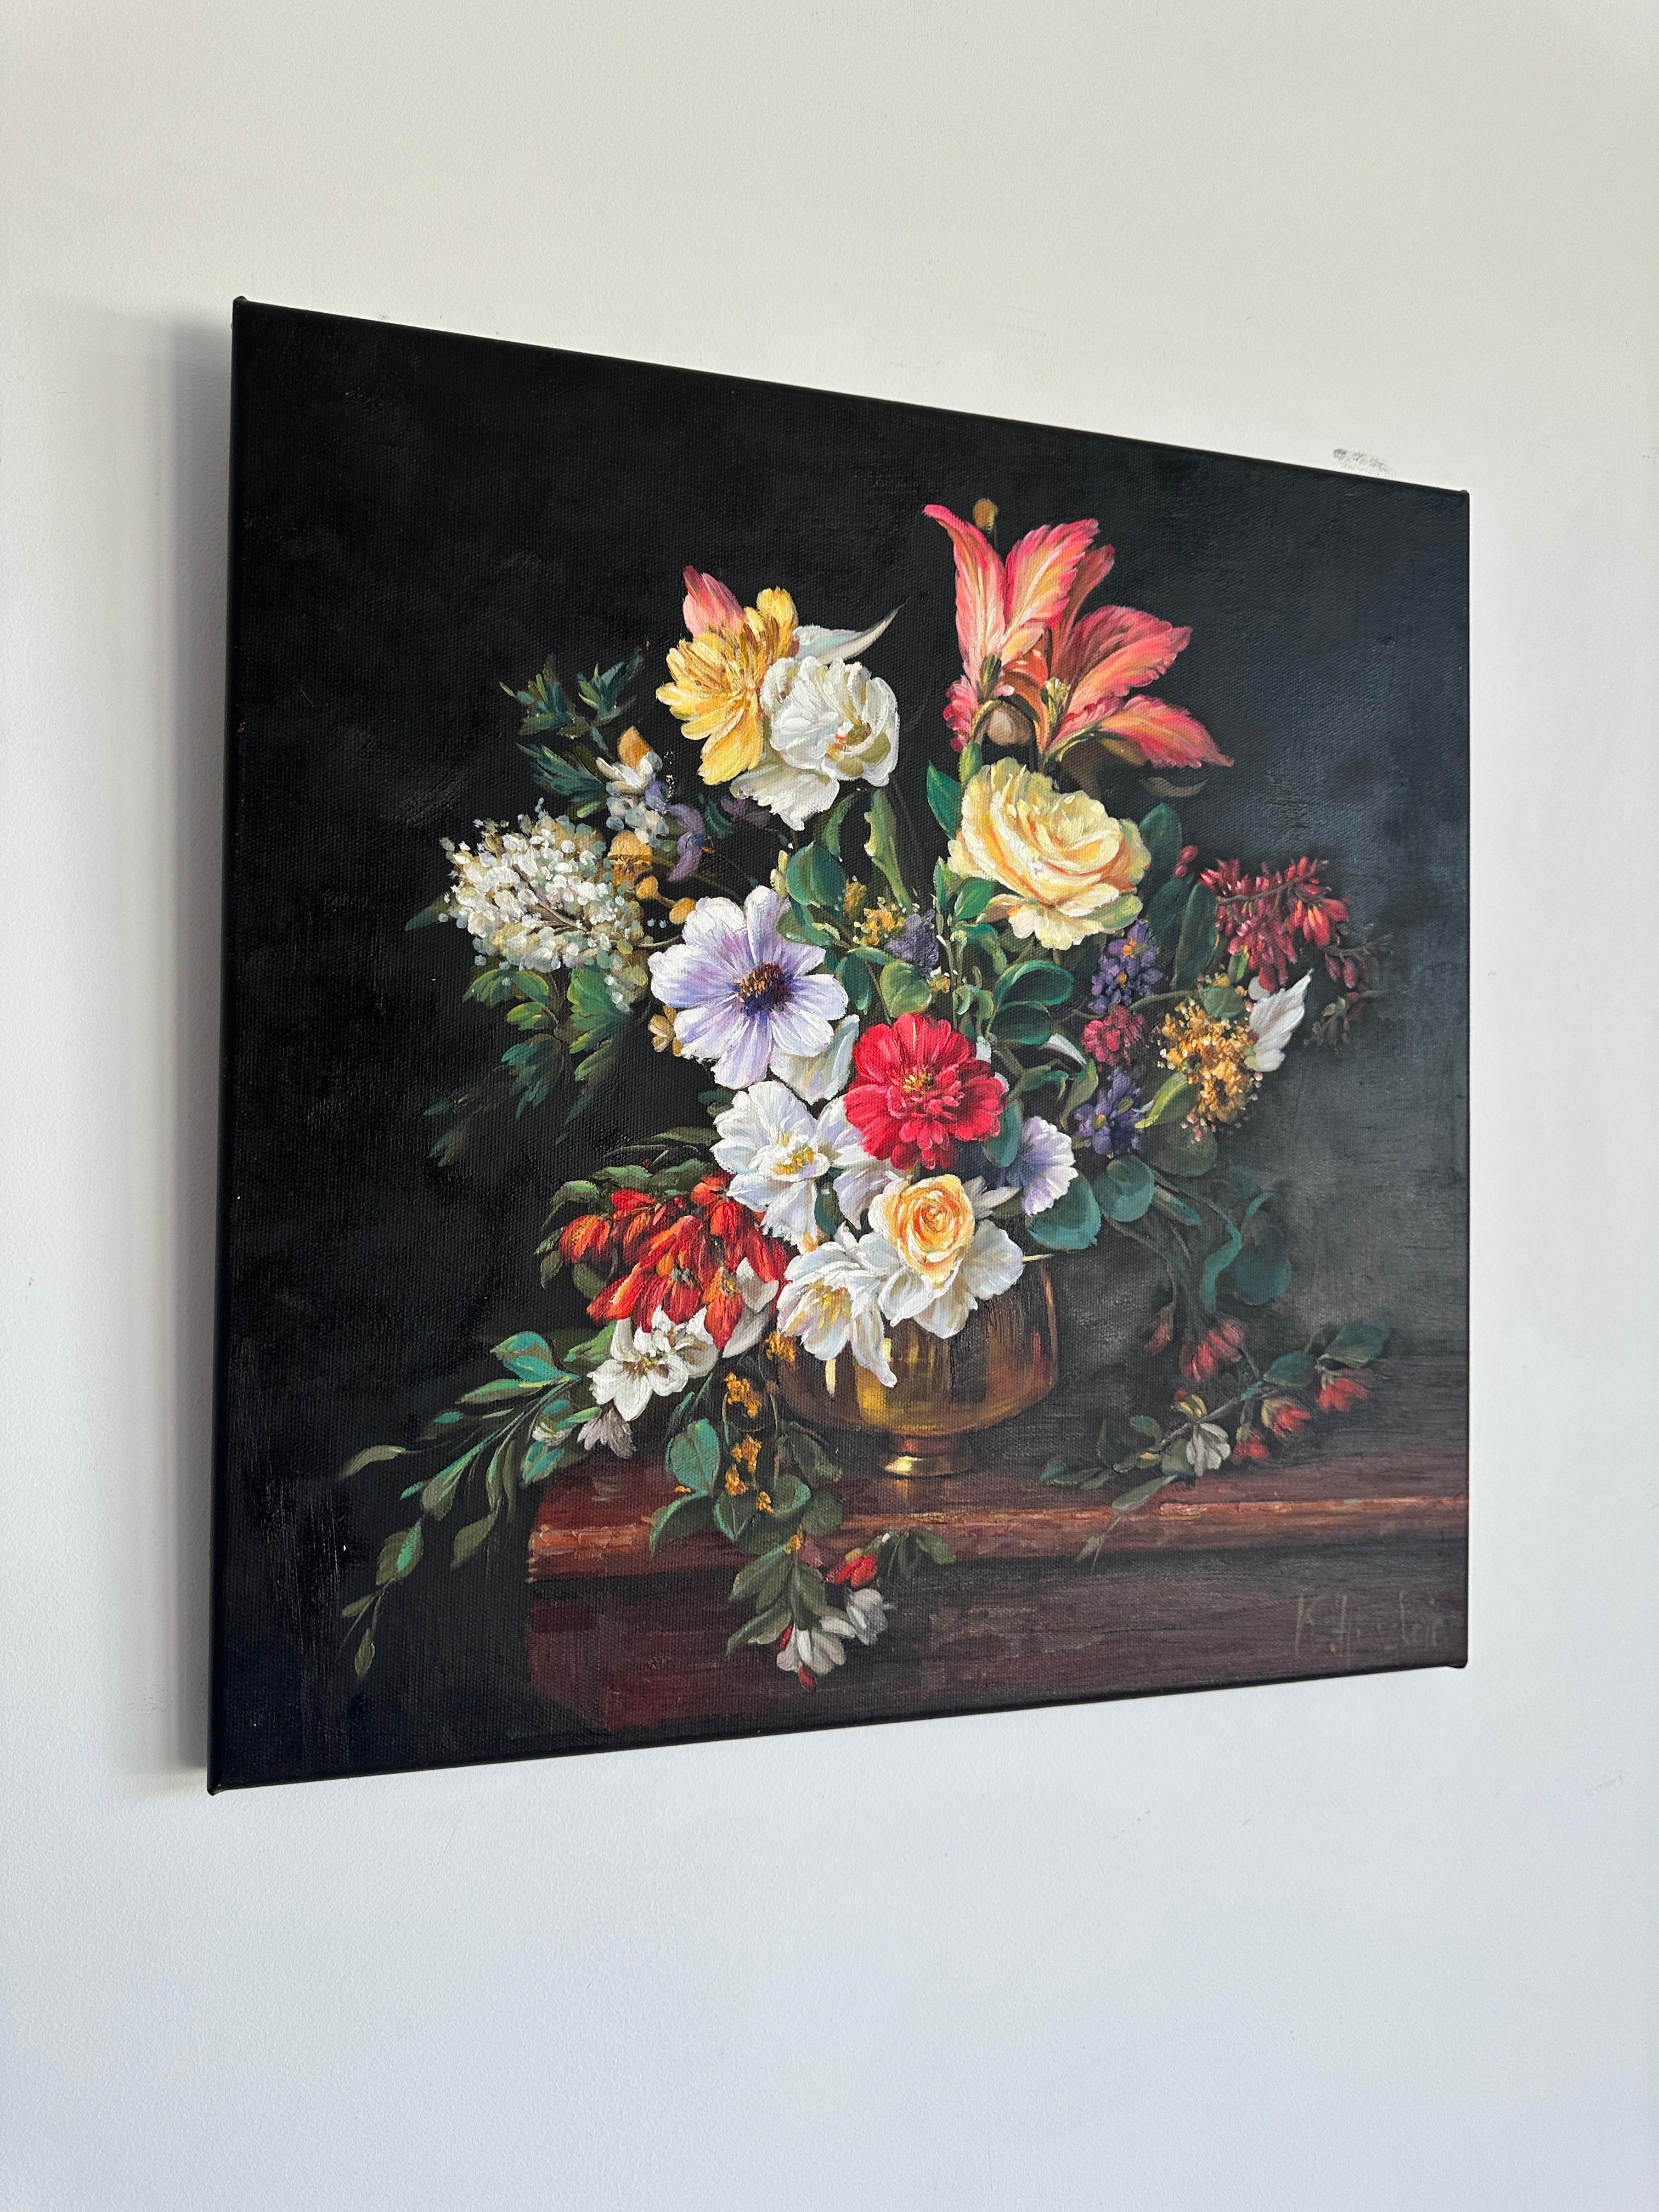 Heart over Head - Katharina Husslein Contemporary Flower Still life Oil Painting 7